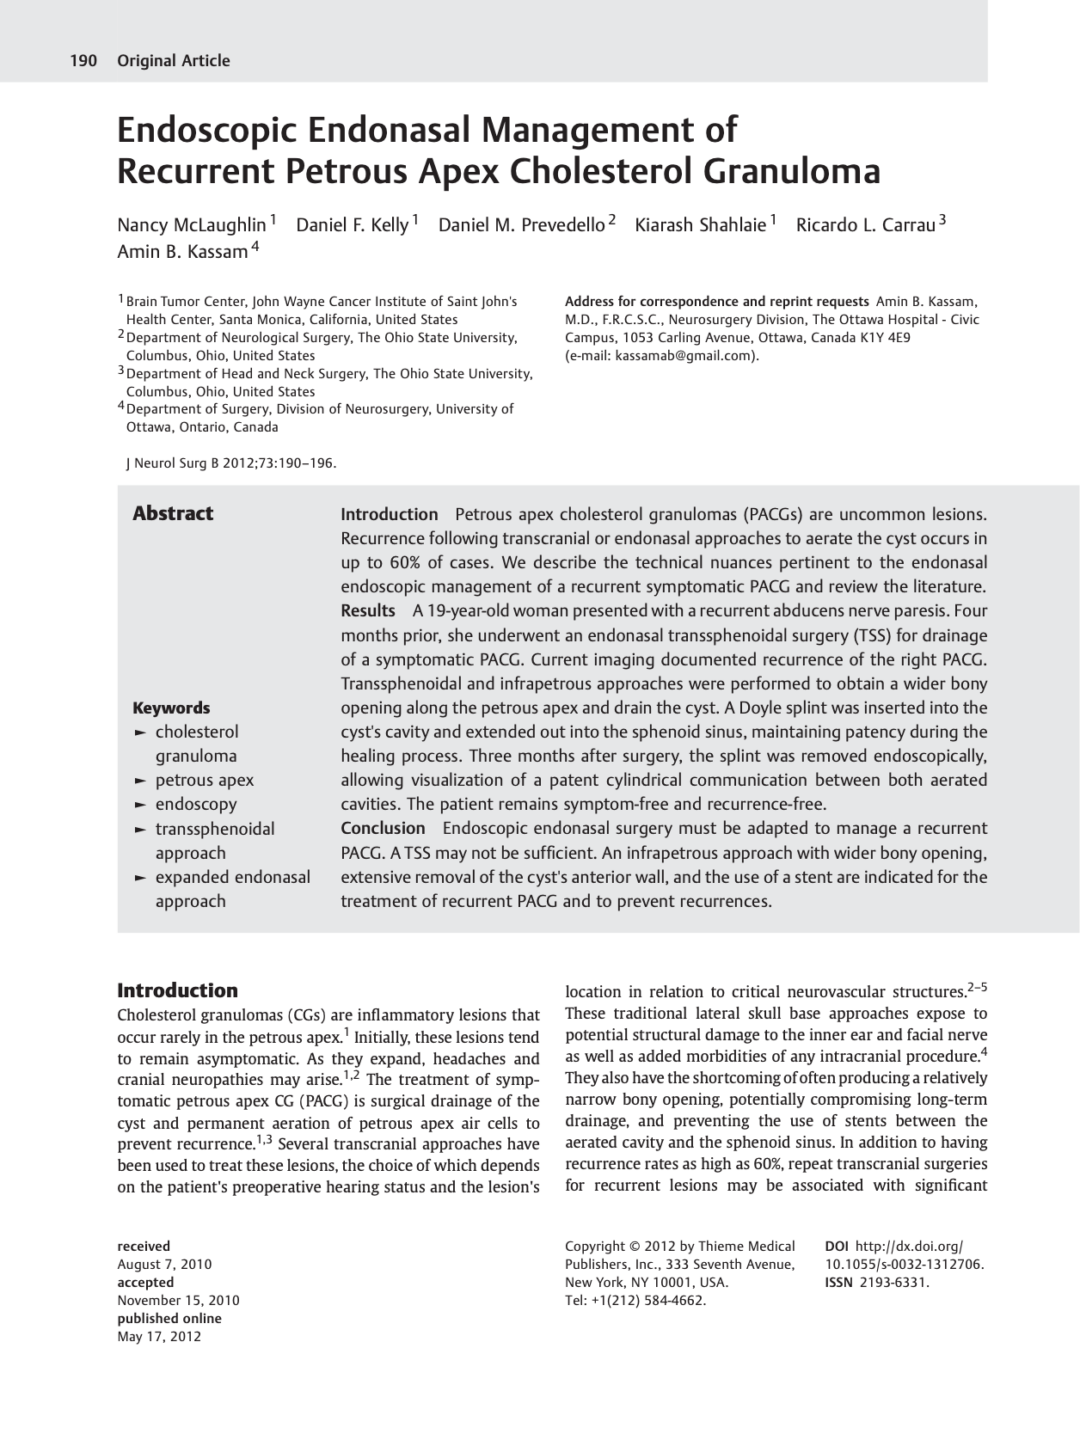 Endoscopic Endonasal Management of Recurrent Petrous Apex Cholesterol Granuloma